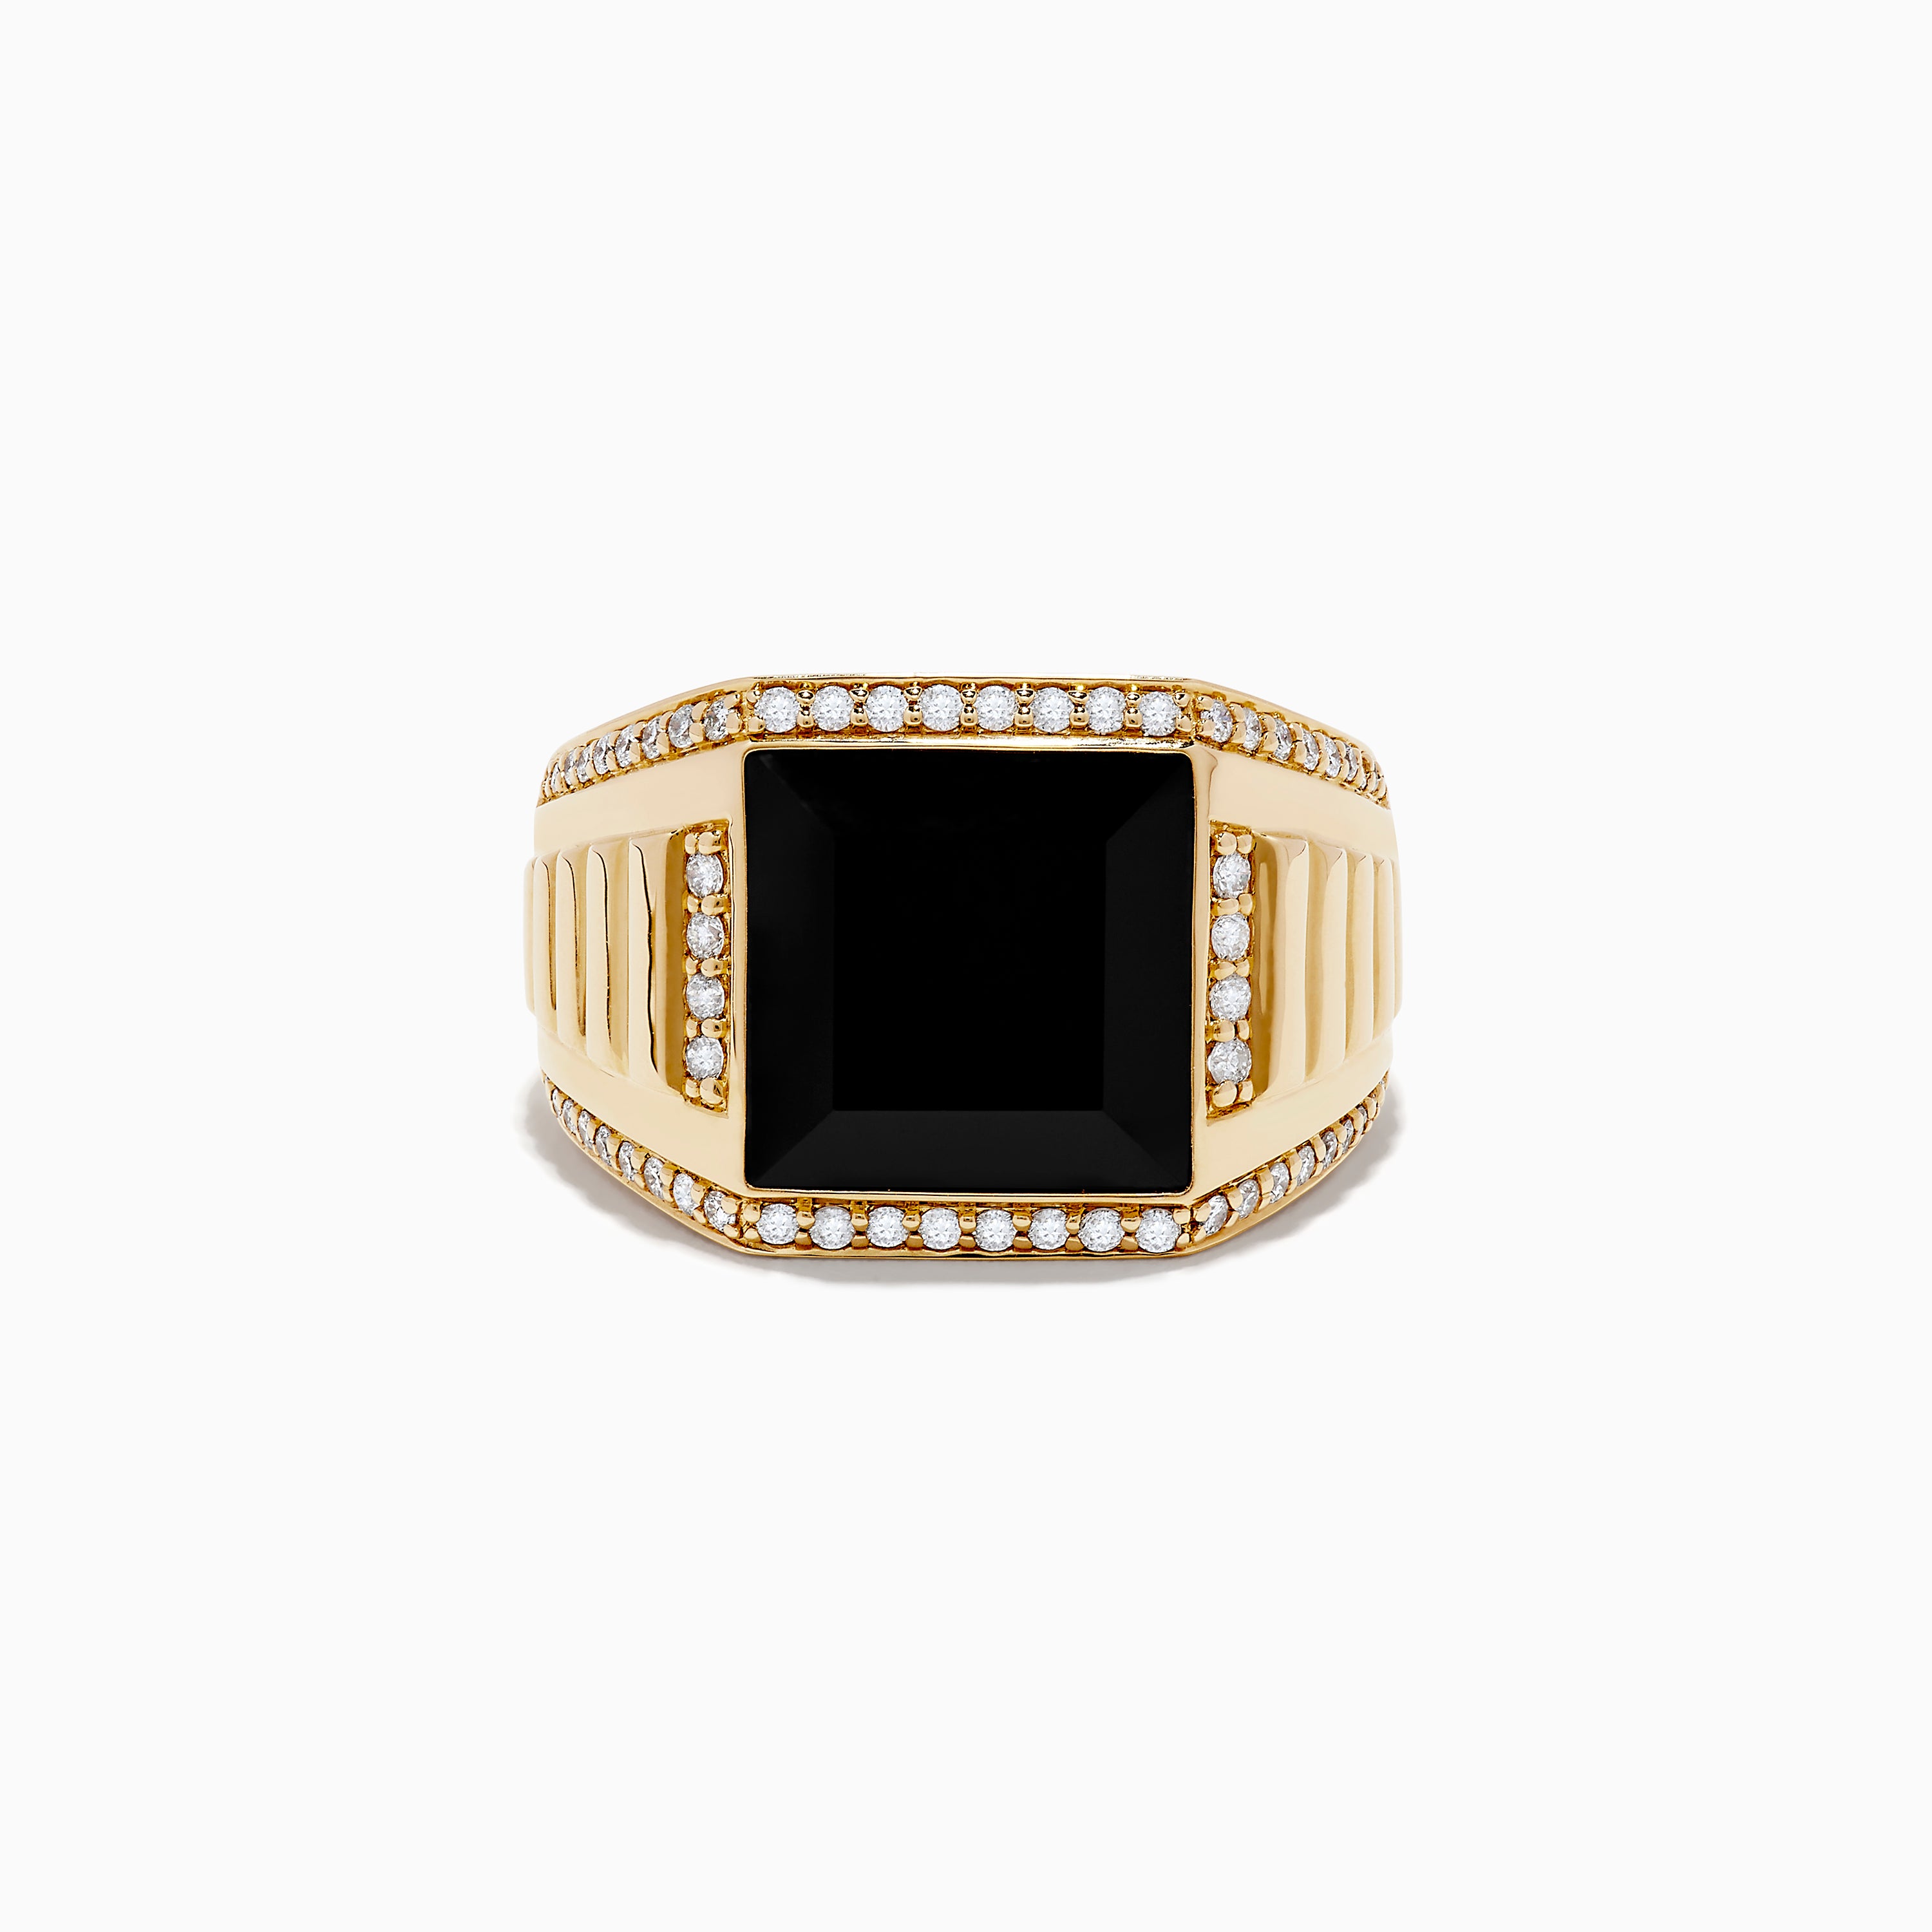 Effy Men's 14K Yellow Gold Onyx and Diamond Ring